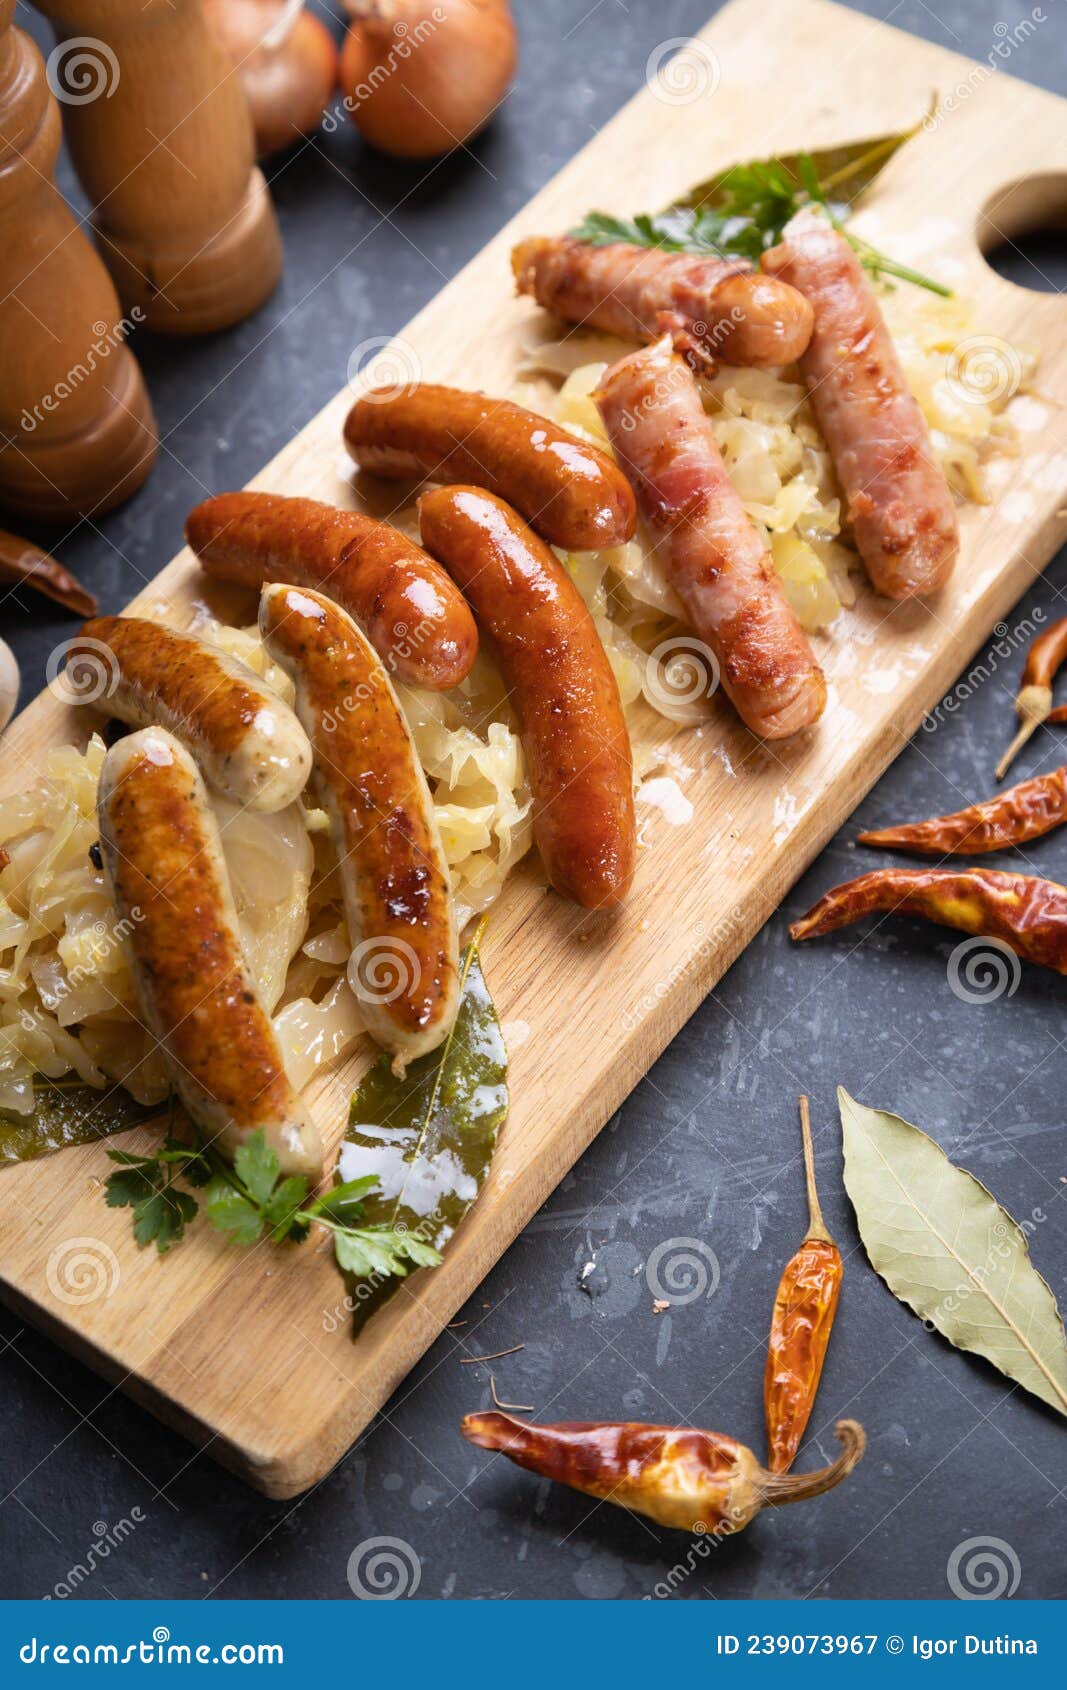 Grilled German Sausage Links with Sauerkraut Stock Image - Image of ...